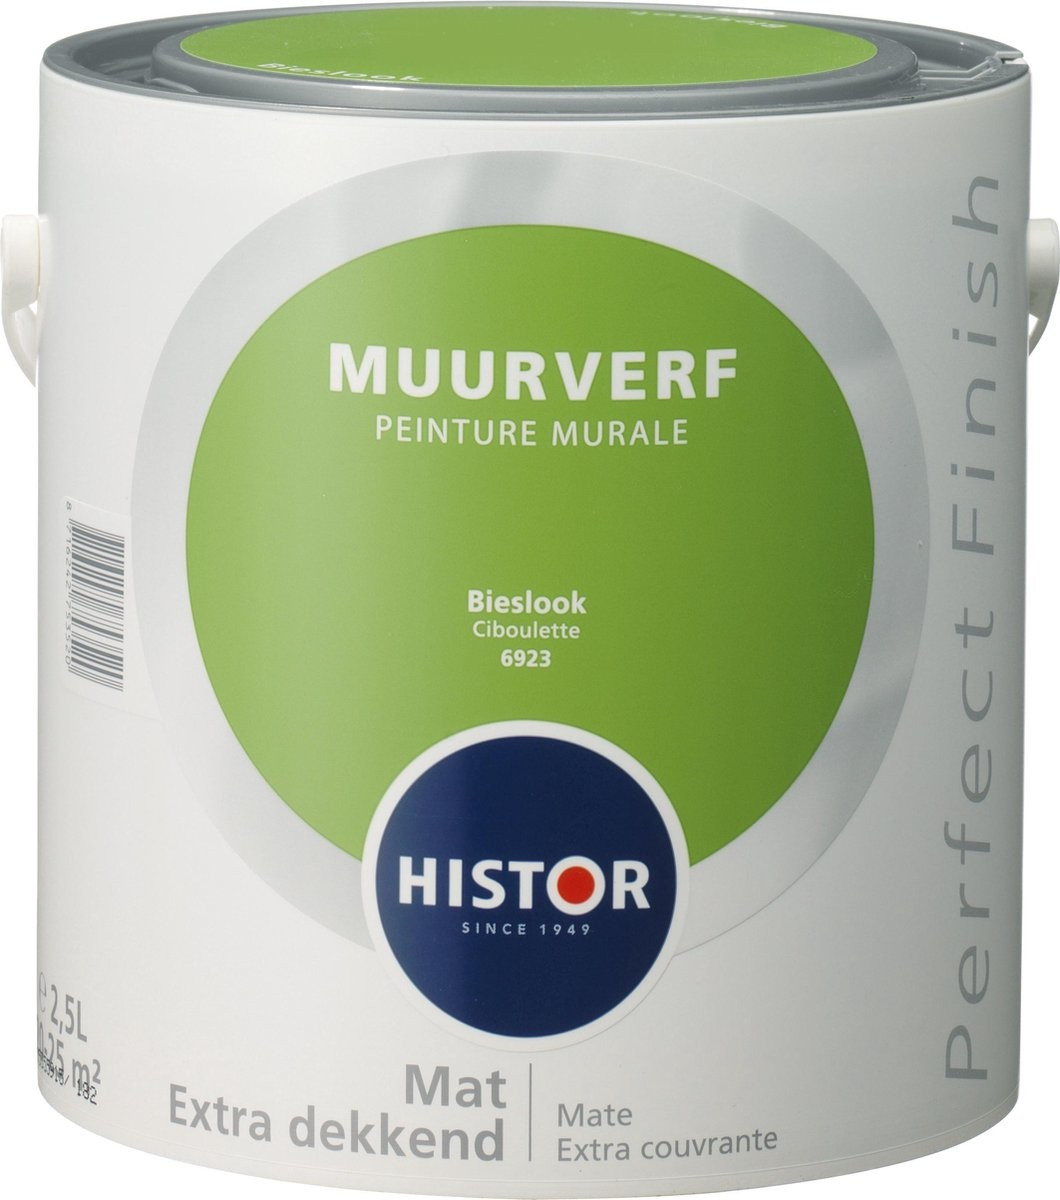 Histor Perfect Finish Muurverf Mat - Bieslook - 2,5 liter